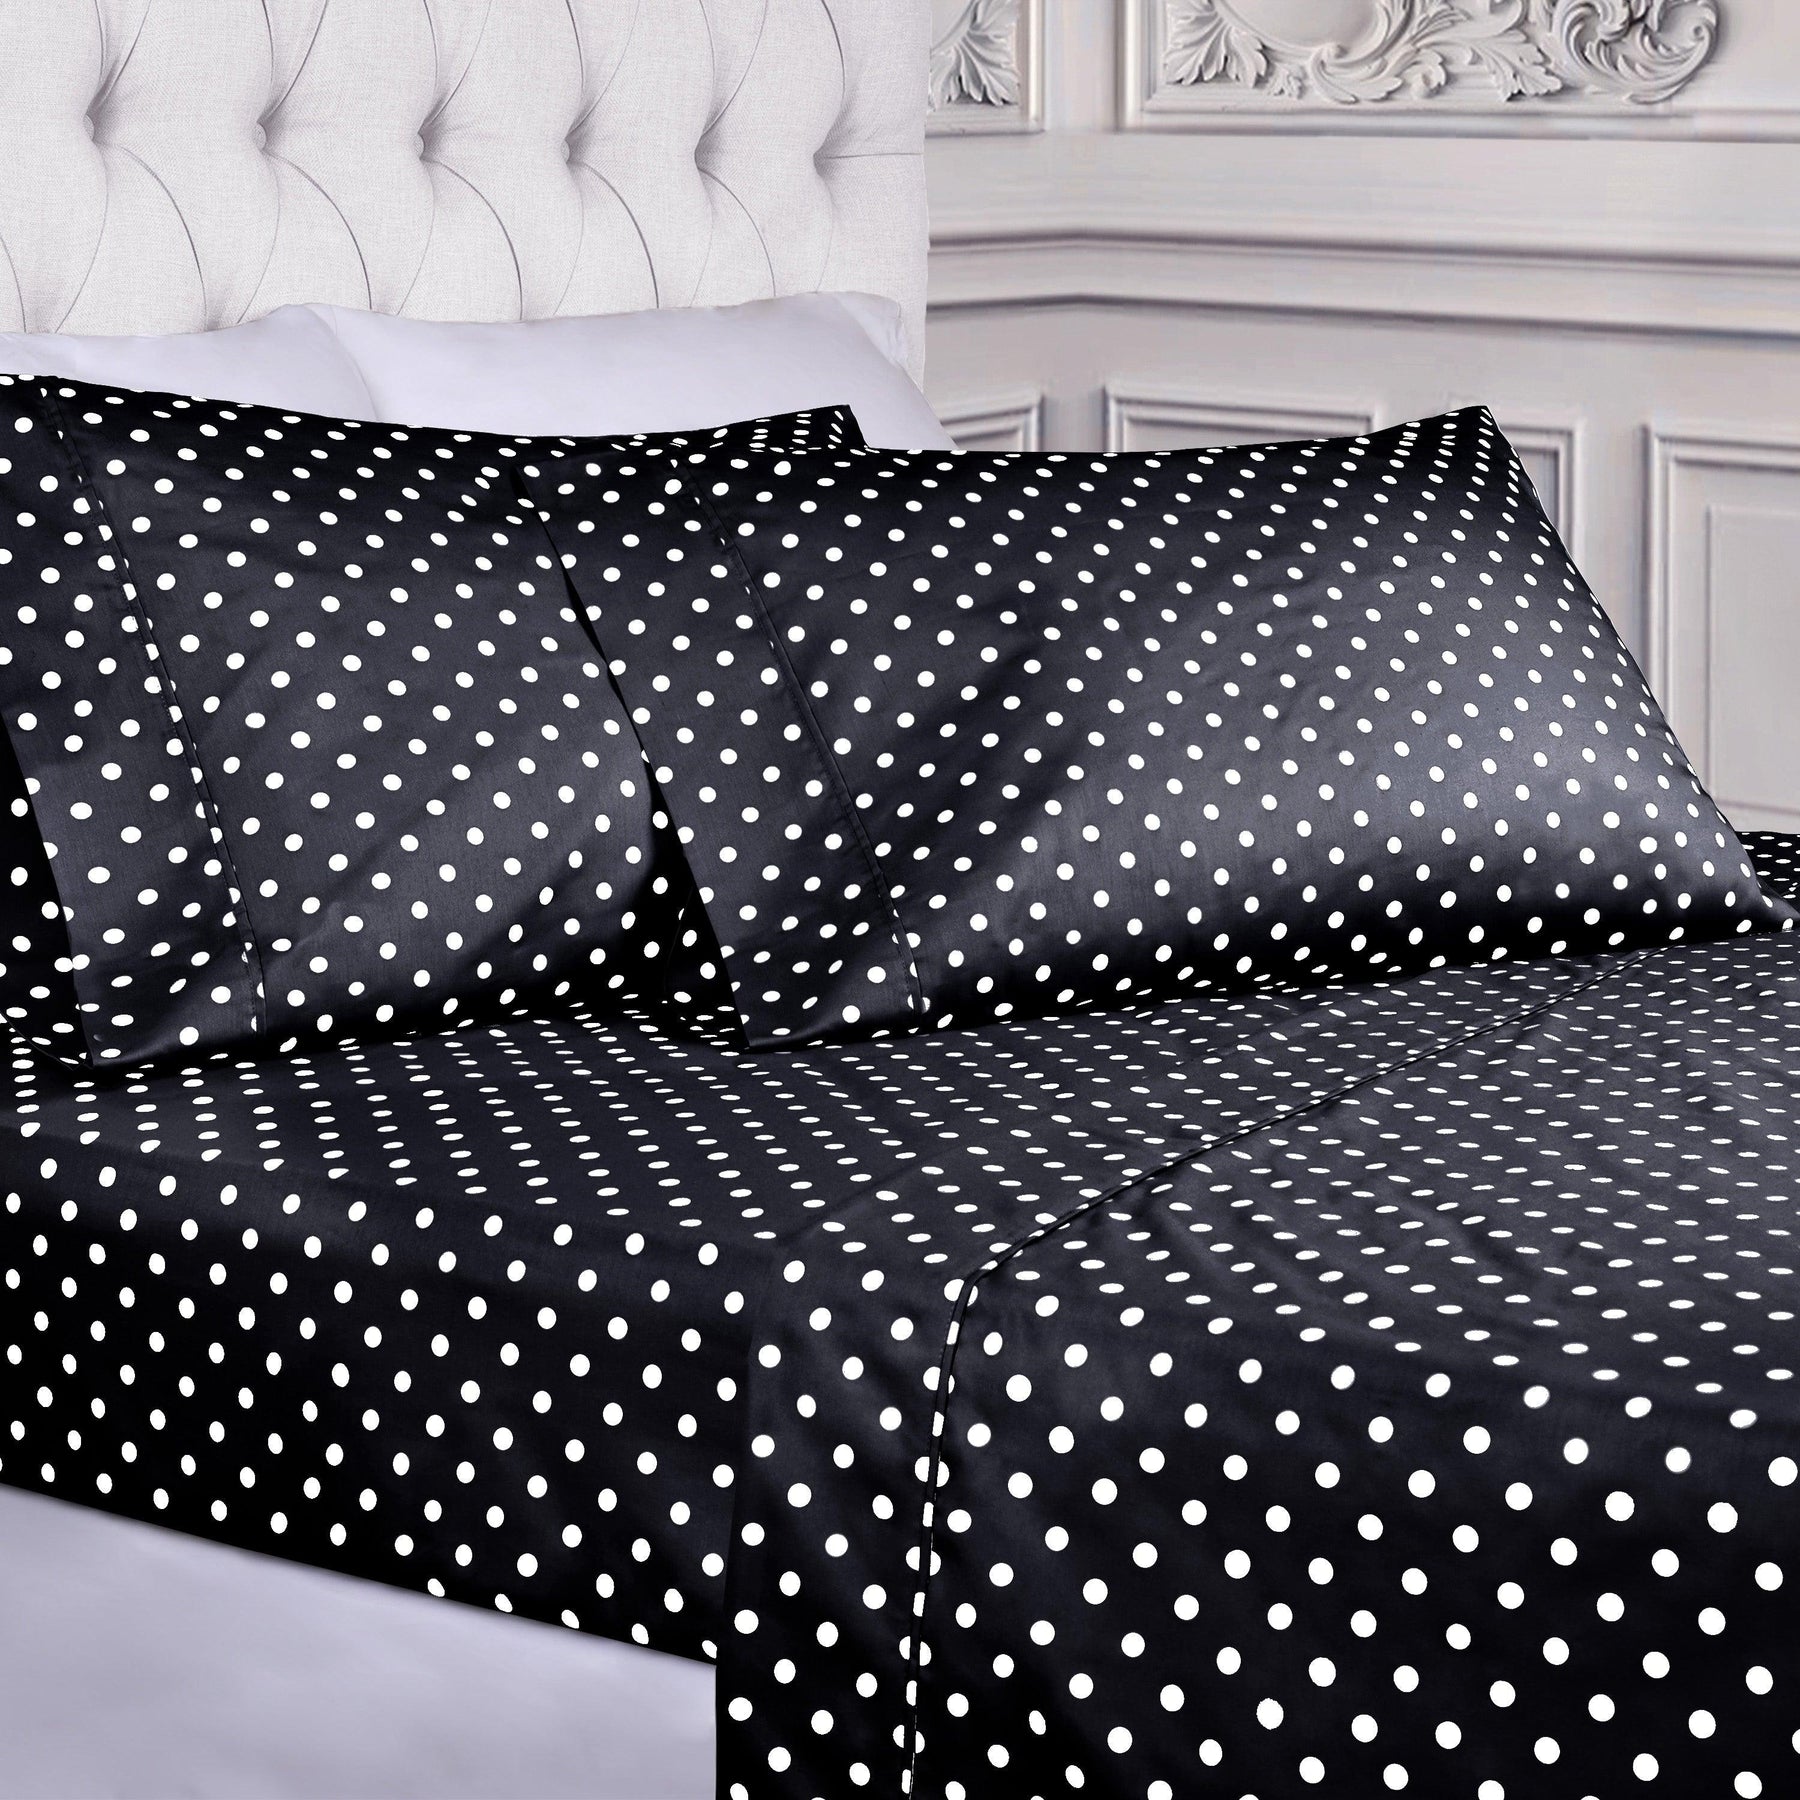 600 Thread Count Cotton Blend Polka Dot Luxury Deep Pocket Retro Bed Sheet Set - Black